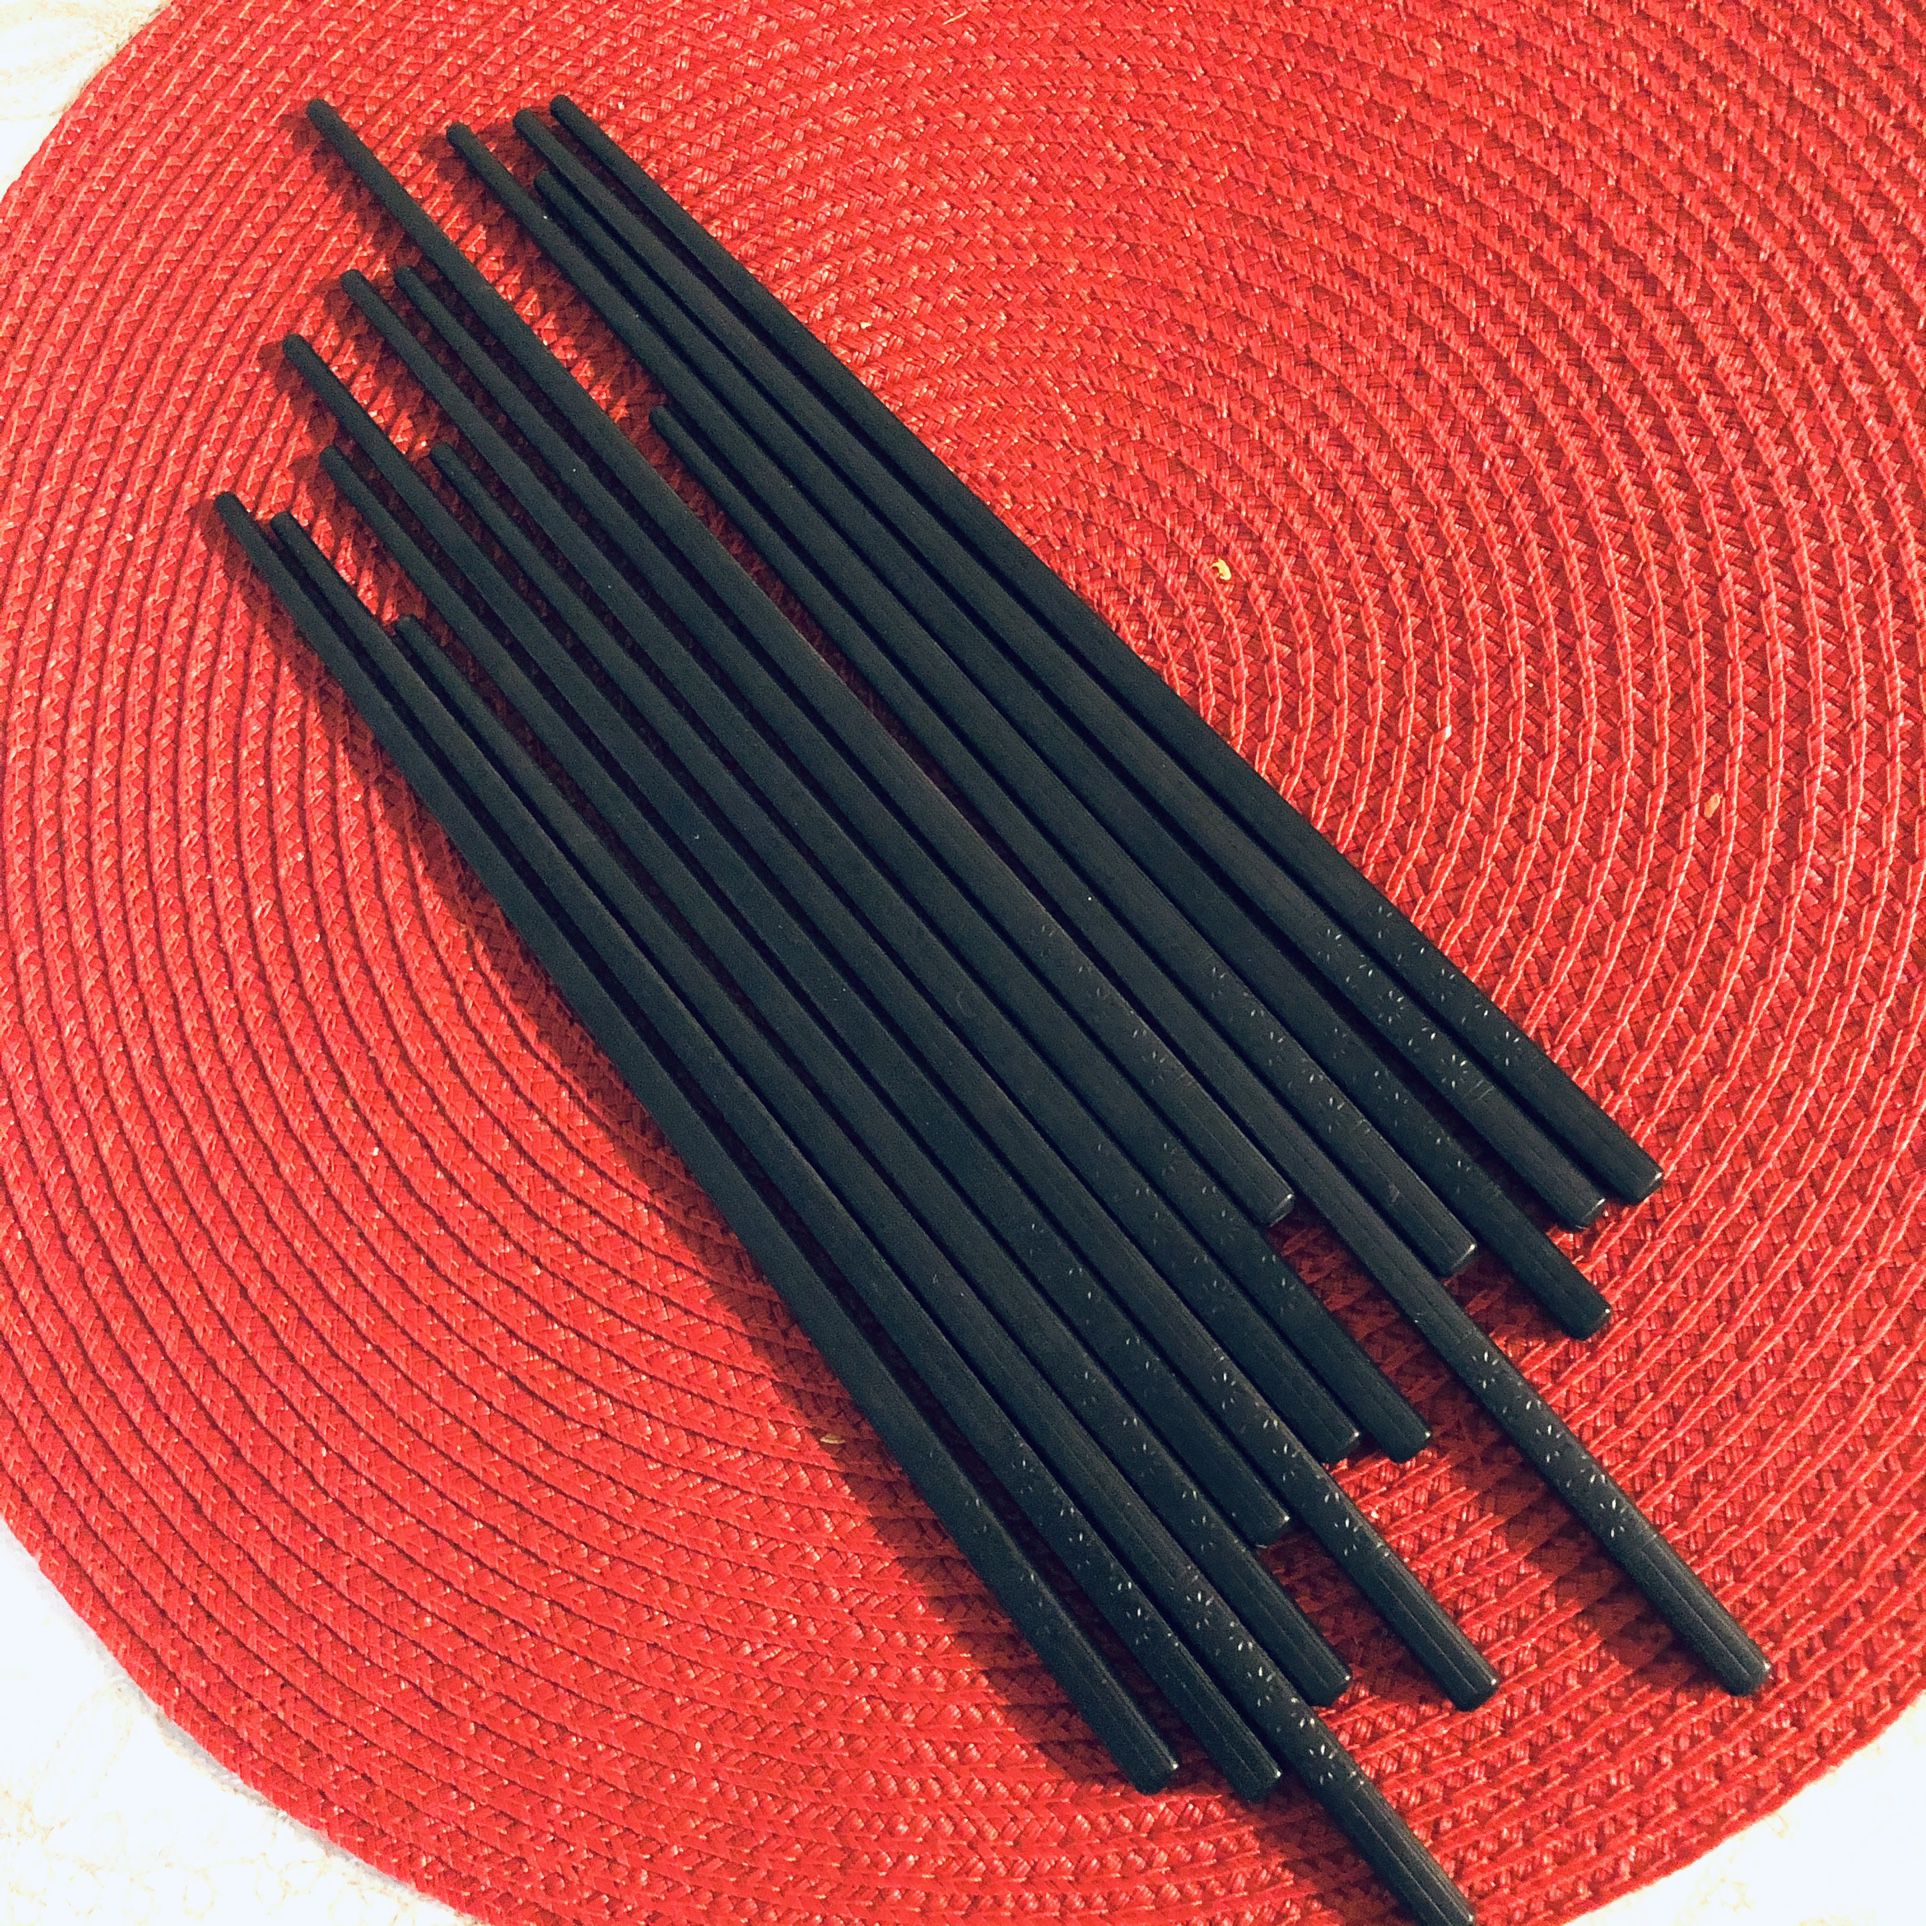 Set Of 14 Chopsticks